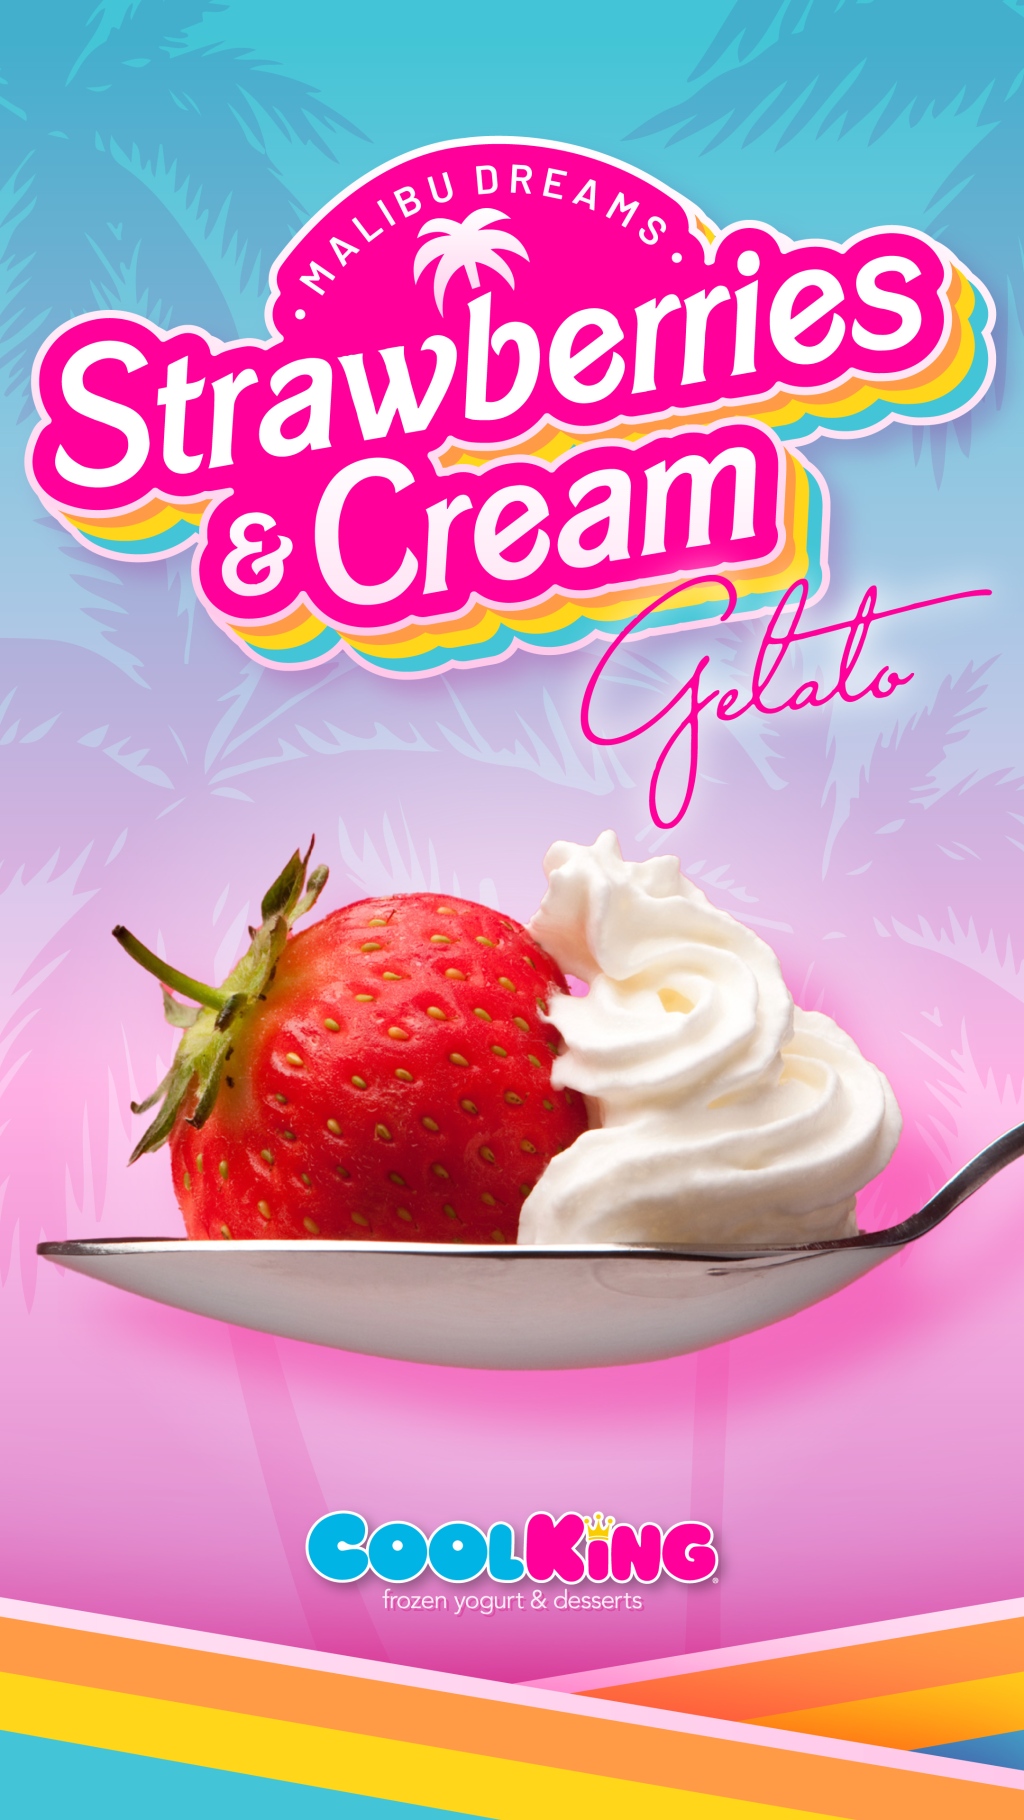 Cool King® “Malibu Dreams Strawberries & Cream” Gelato